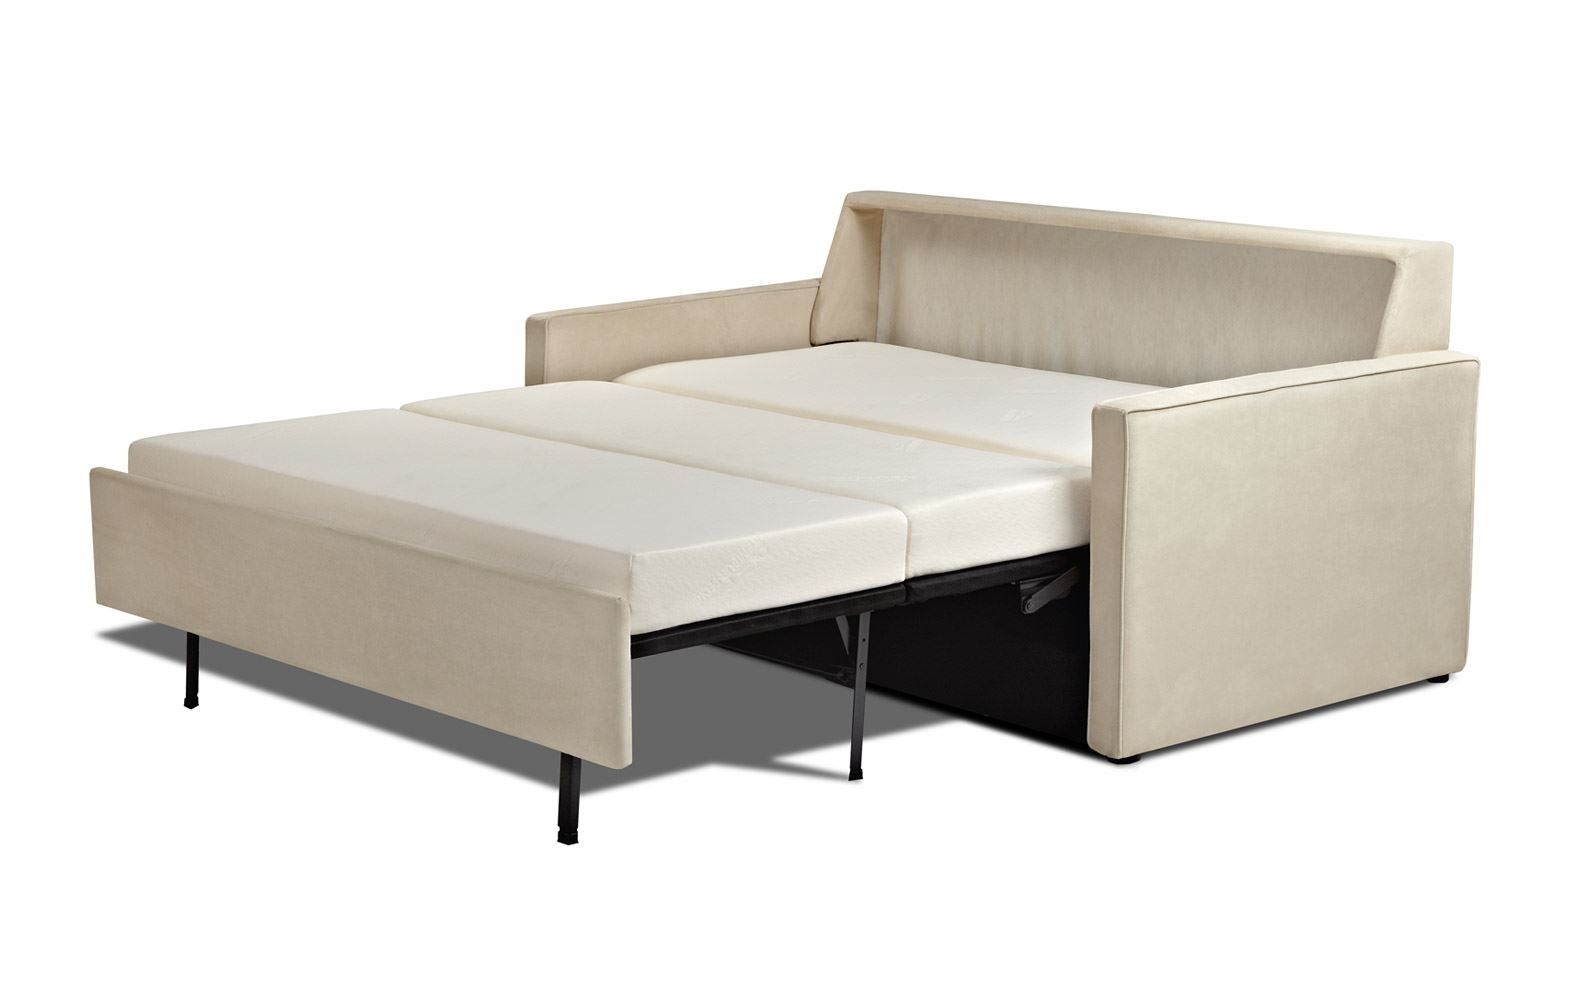 Tasty King Size Sleeper Sofa Bedroom Ideas Regarding Designs 8 Pertaining To King Size Sleeper Sofas (Photo 1 of 10)